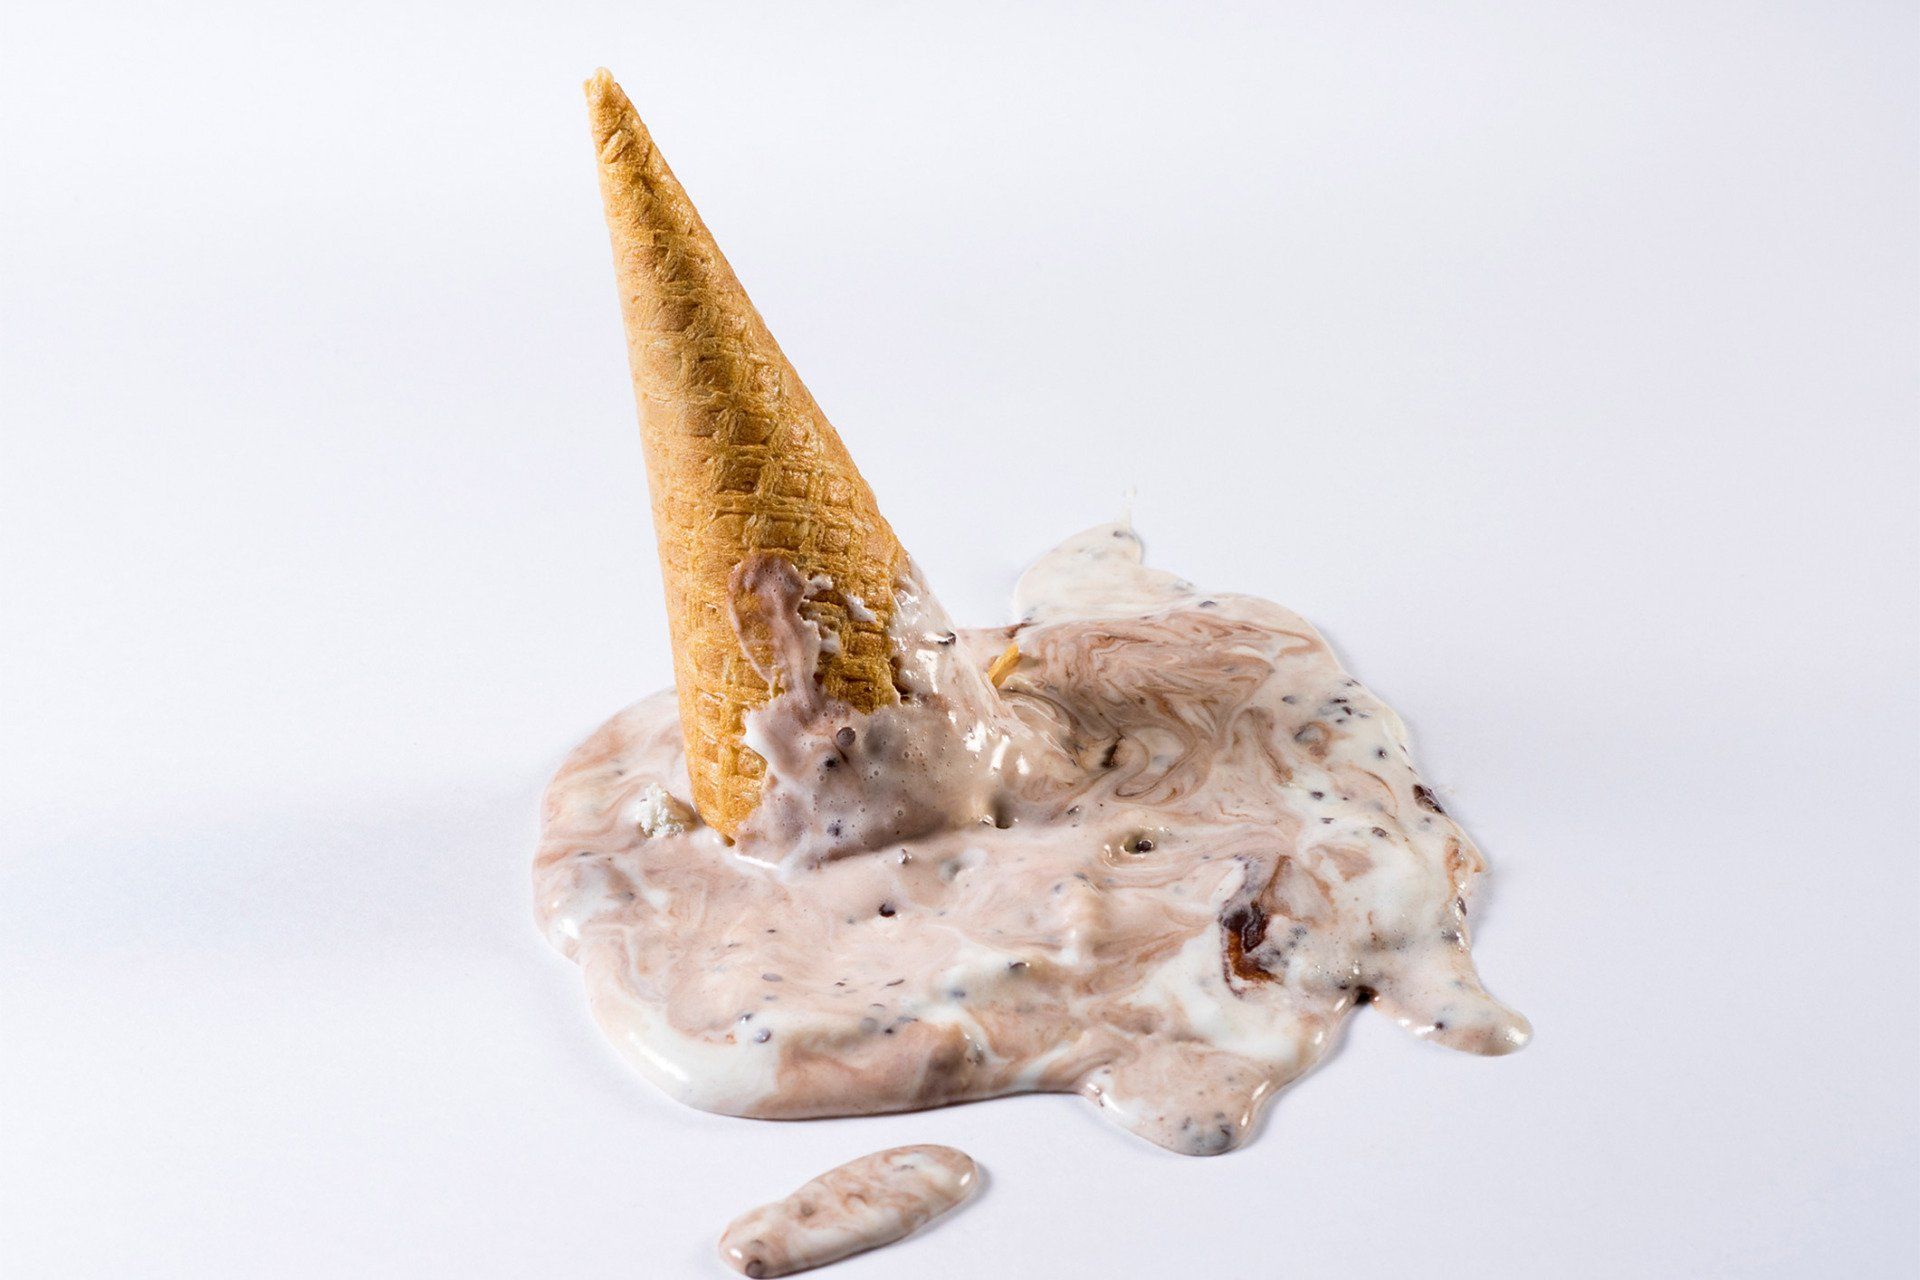 Chocolate Ice Cream In Cone That Has Been Spilt - Warren, MI - Maple Lane Pest Control